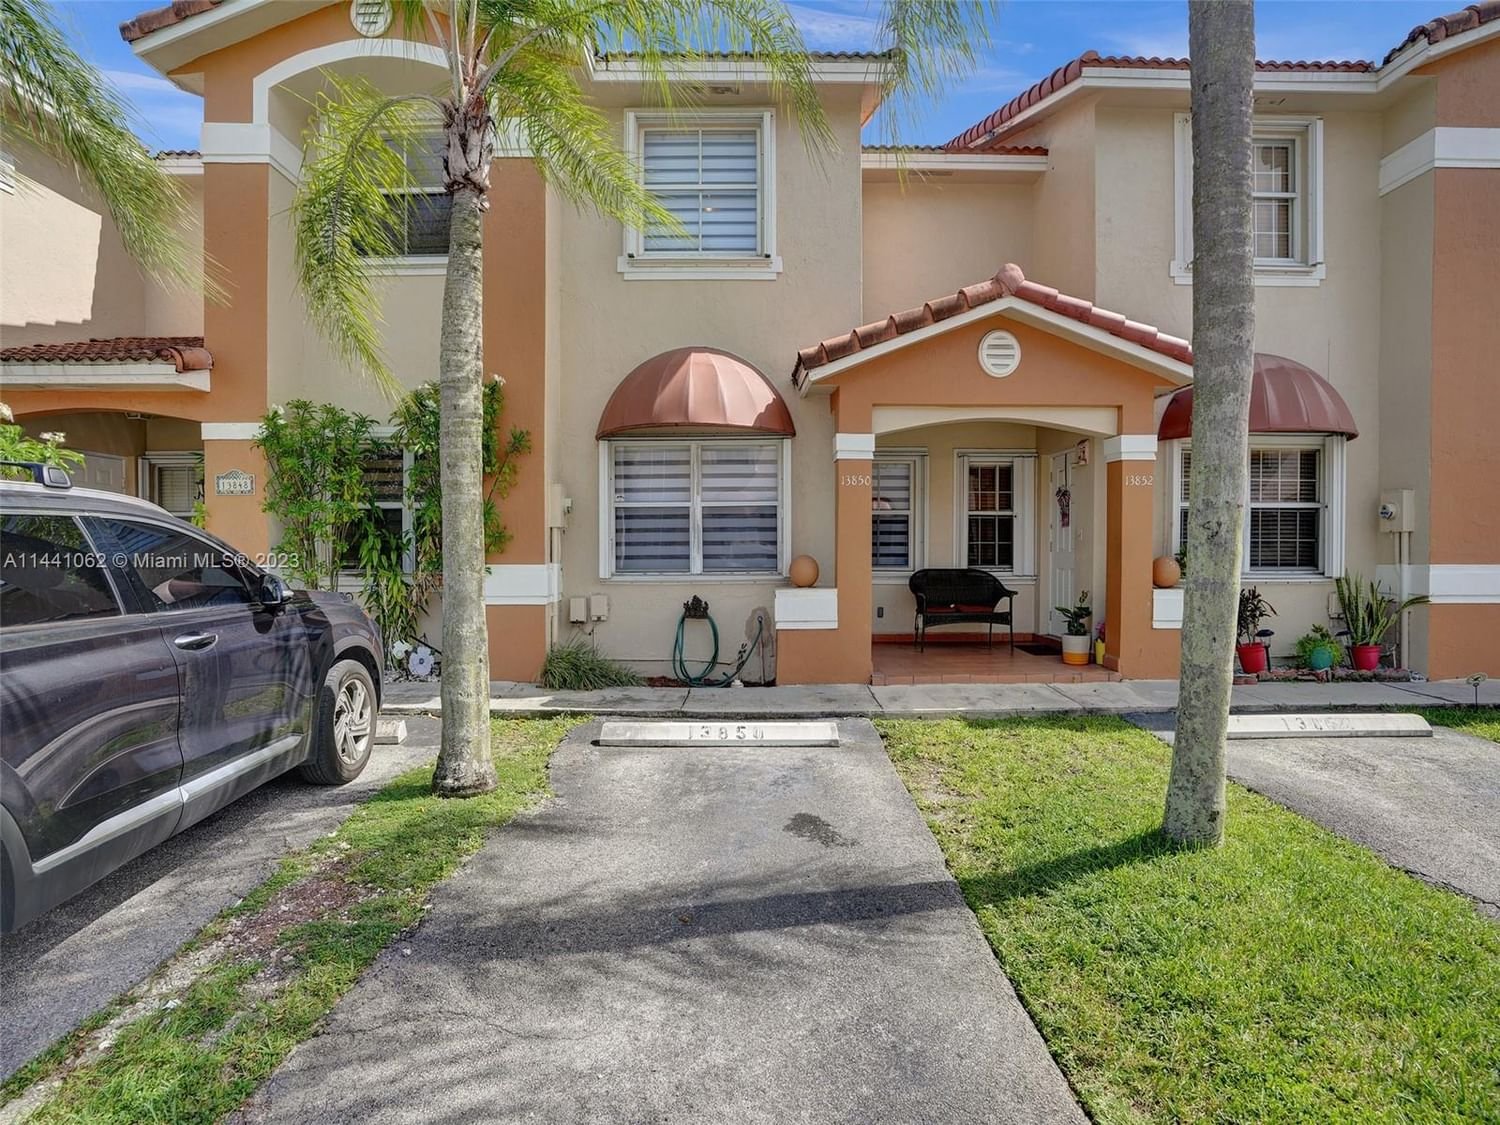 Real estate property located at 13850 64th St #138501, Miami-Dade County, Miami, FL